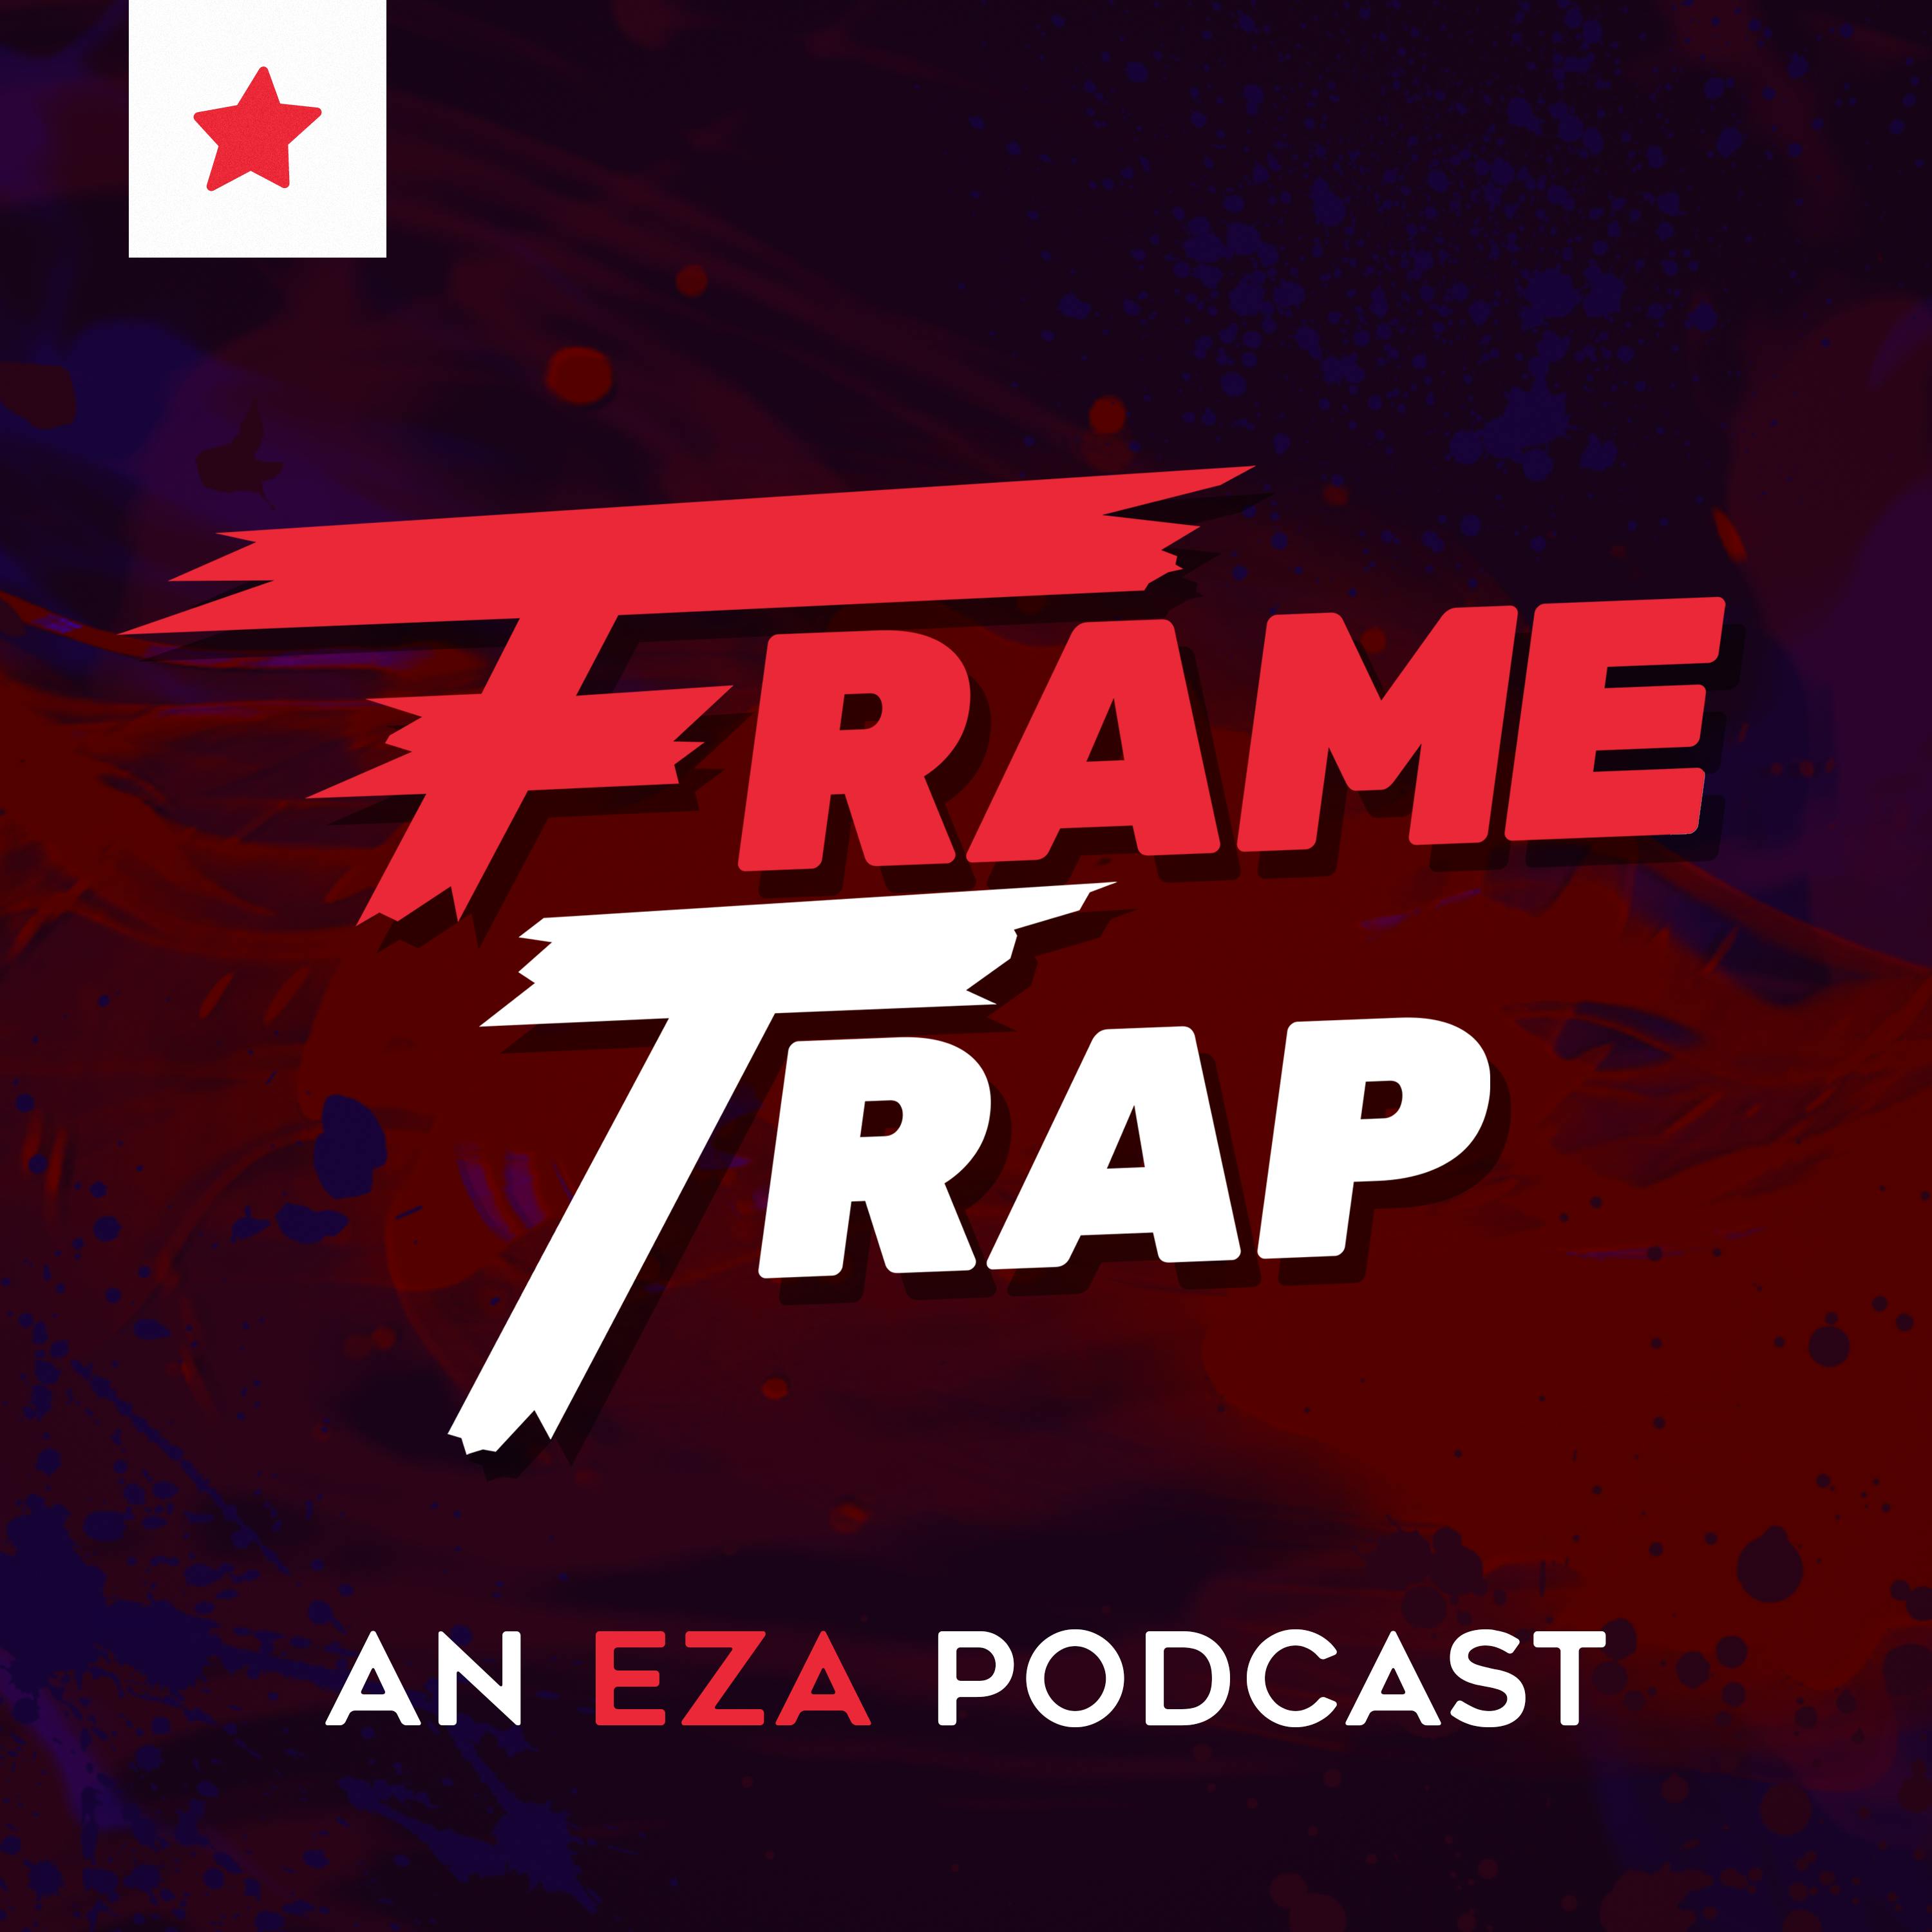 Frame Trap - Episode 172 